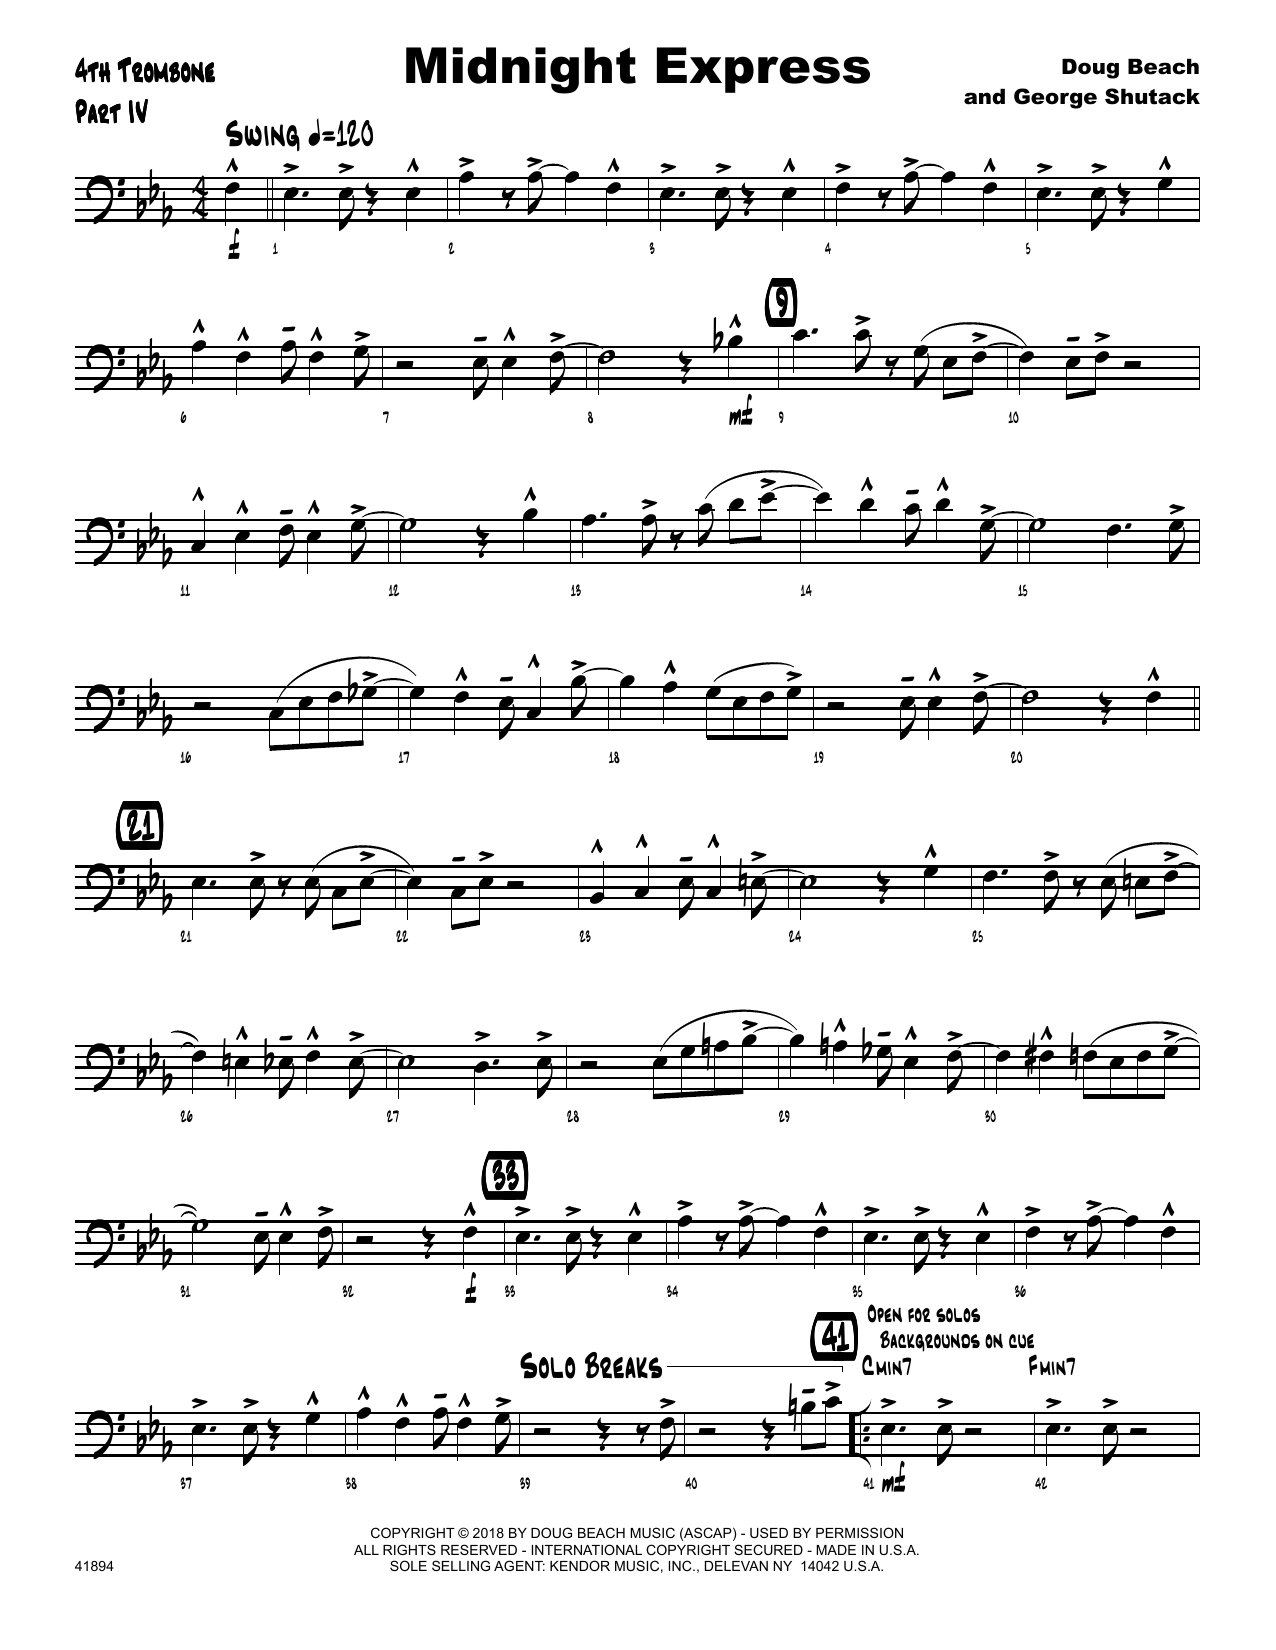 Download Doug Beach & George Shutack Midnight Express - 4th Trombone Sheet Music